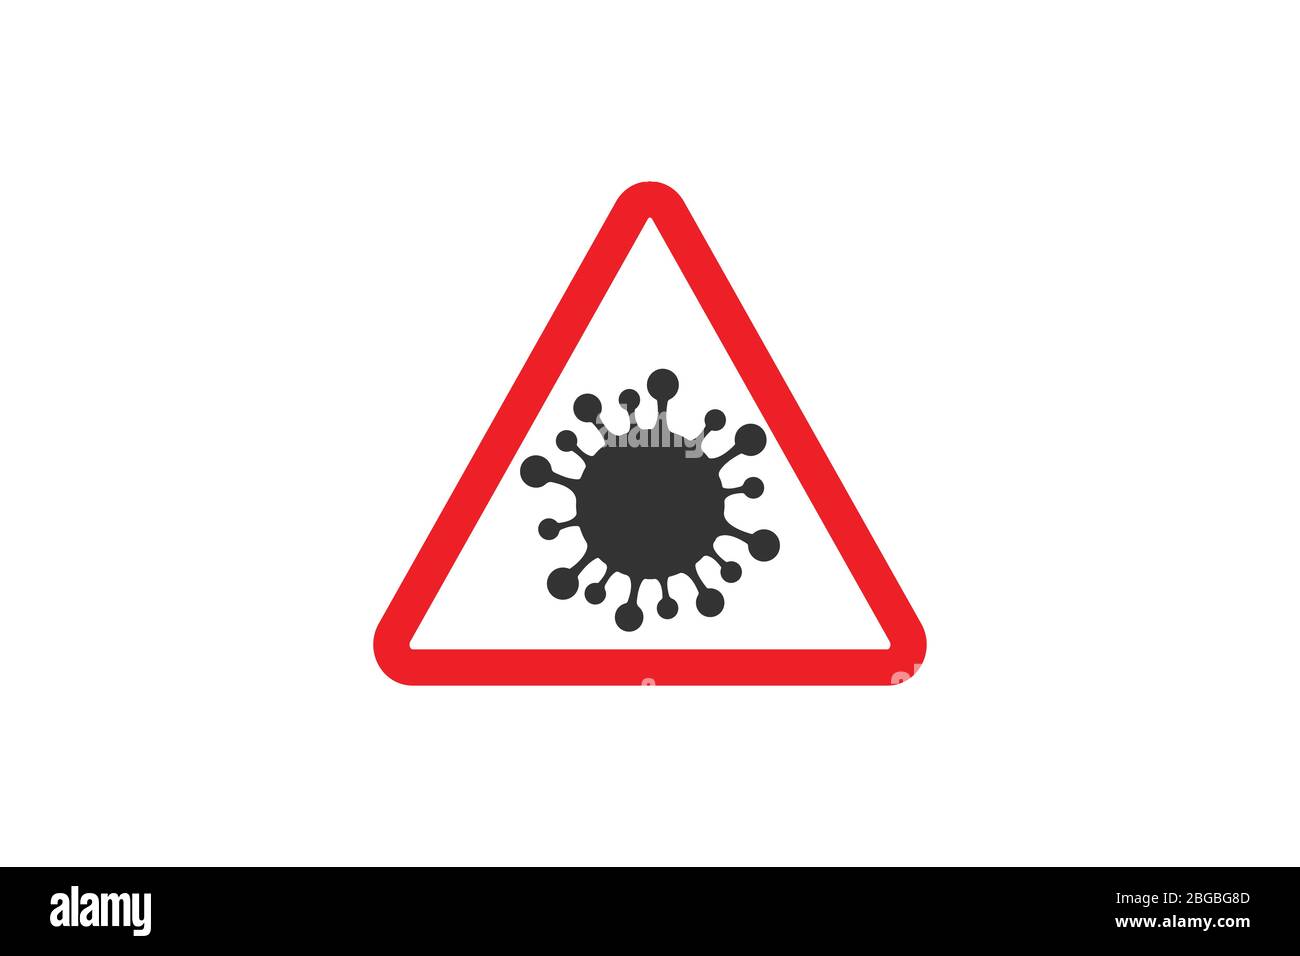 Coronavirus sign. Corona virus Bacteria Cell Icon, 2019-nCoV in caution traffic signs. Warning symbol of COVID-19, Novel coronavirus. Vector icon. Stock Vector